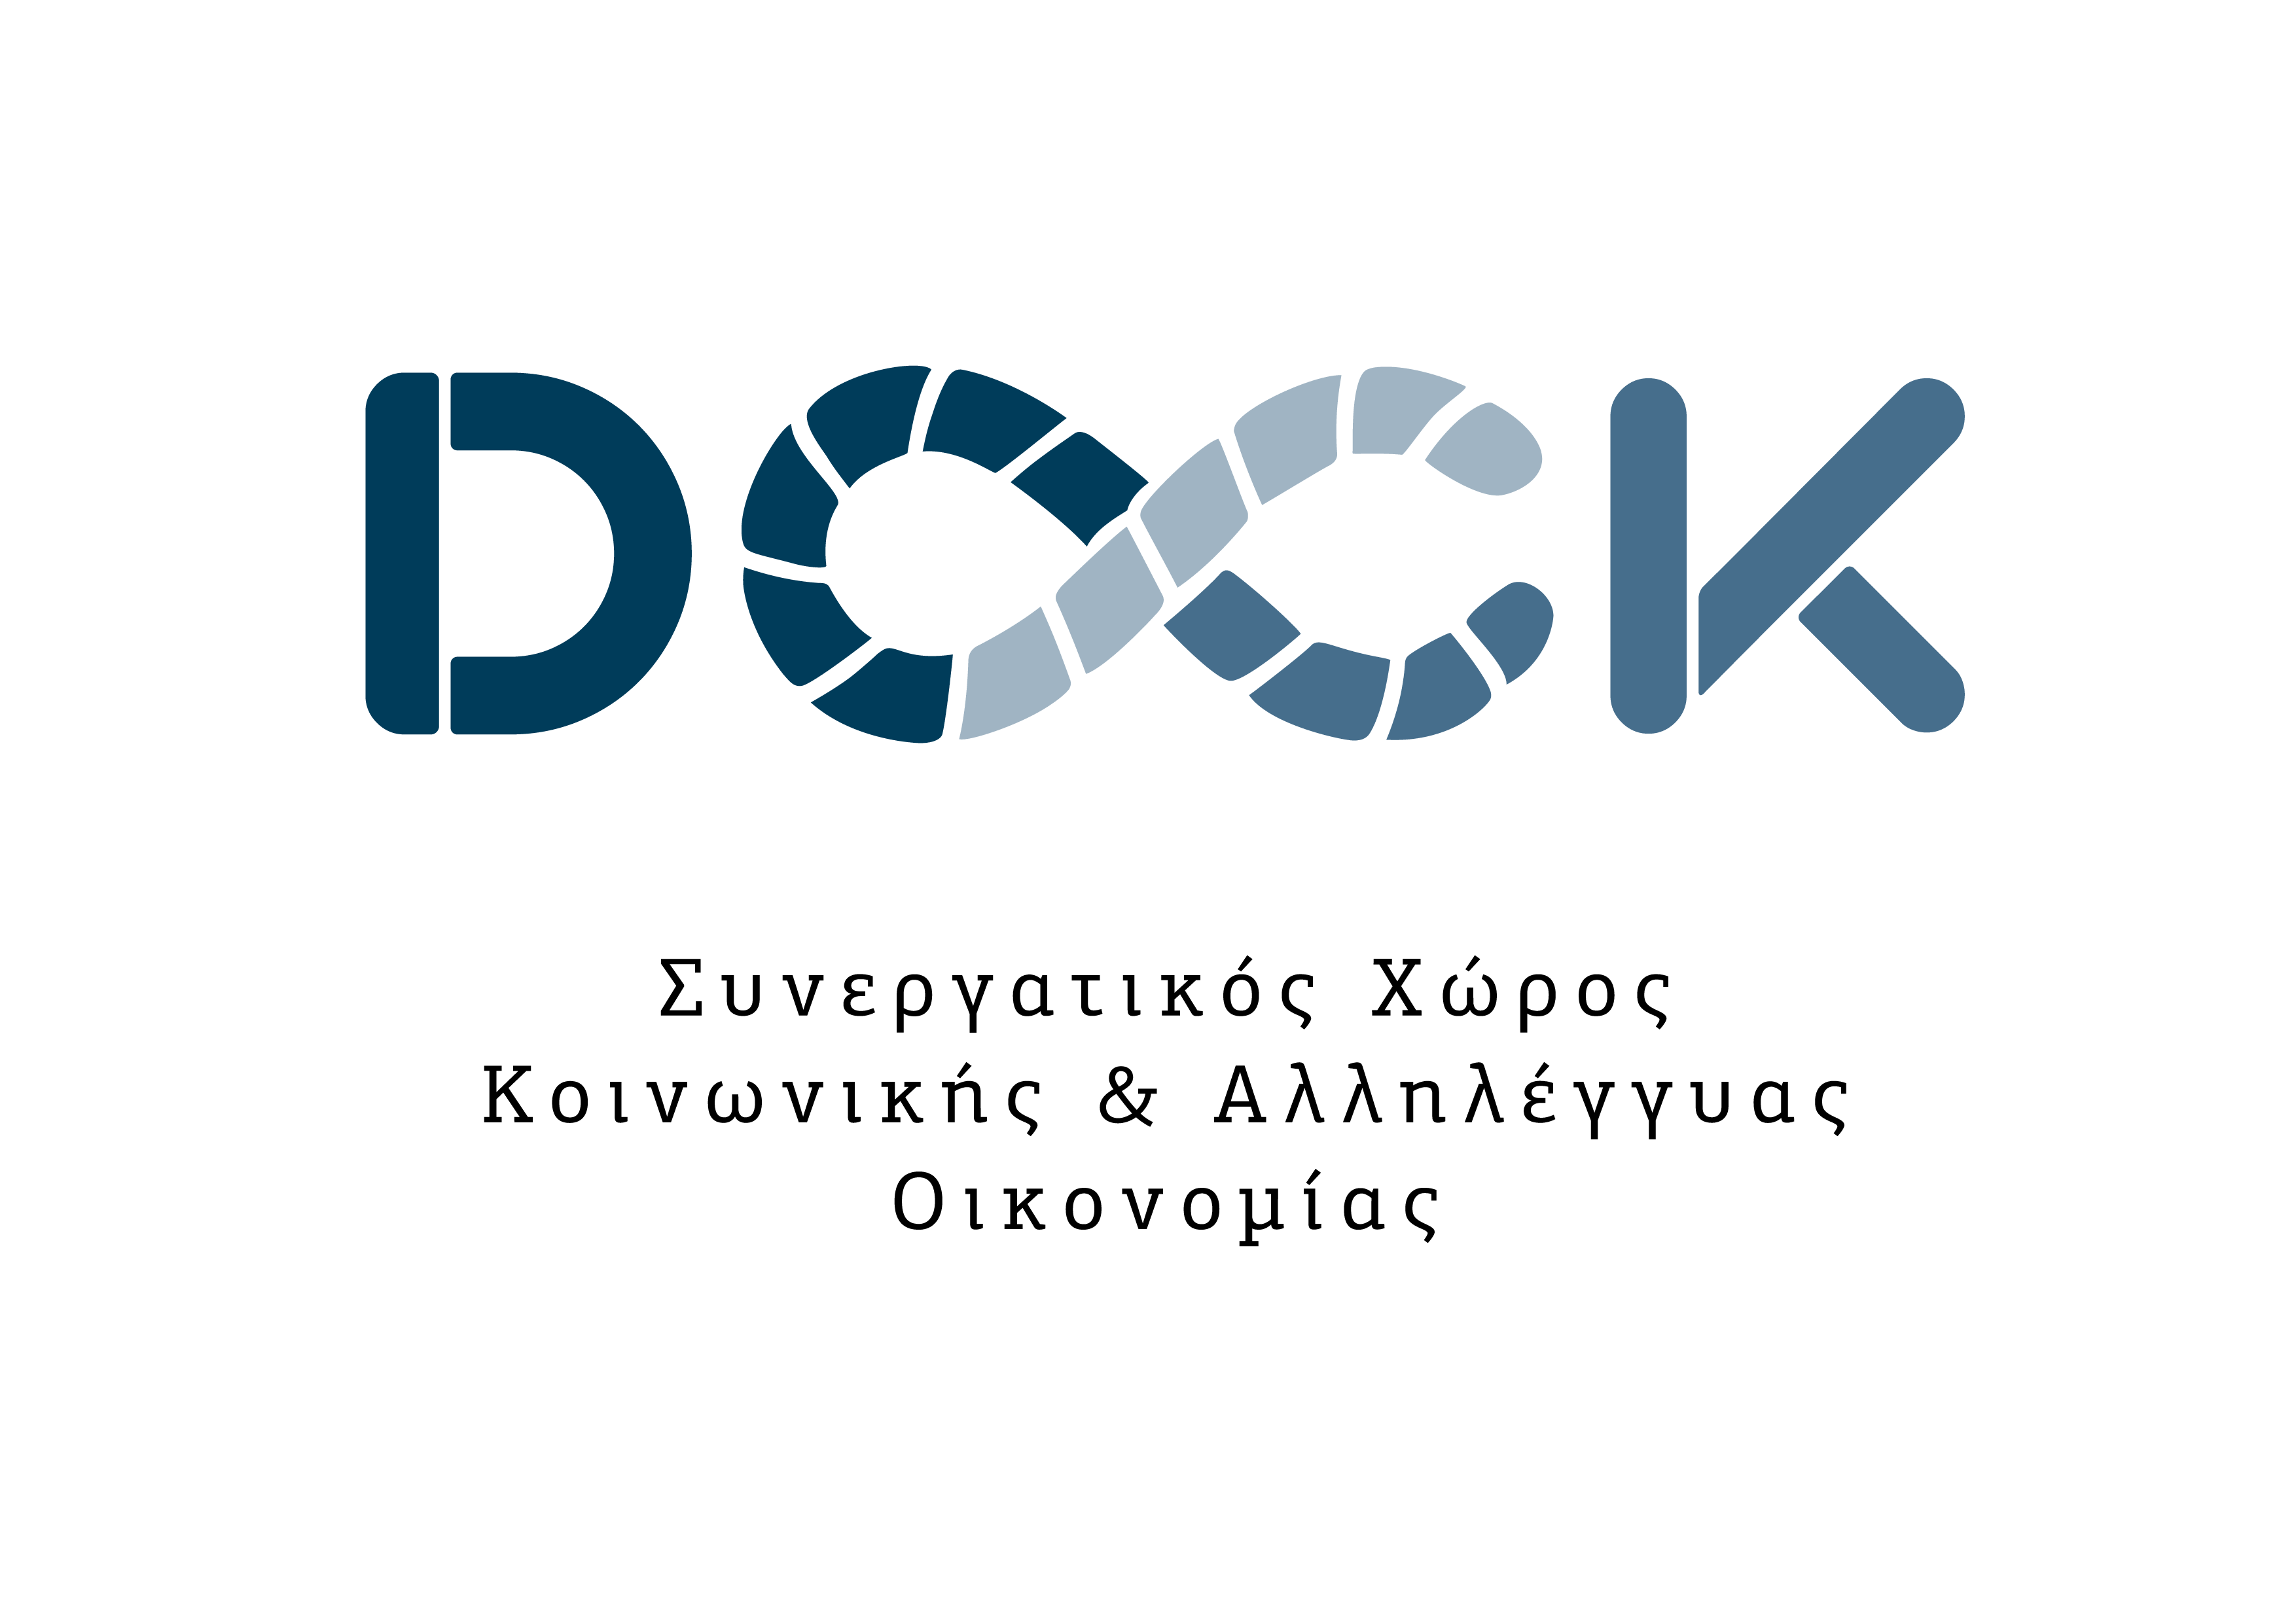 Dock - Συνεργατικός Χώρος Κοινωνικής και Αλληλέγγυας Οικονομίας